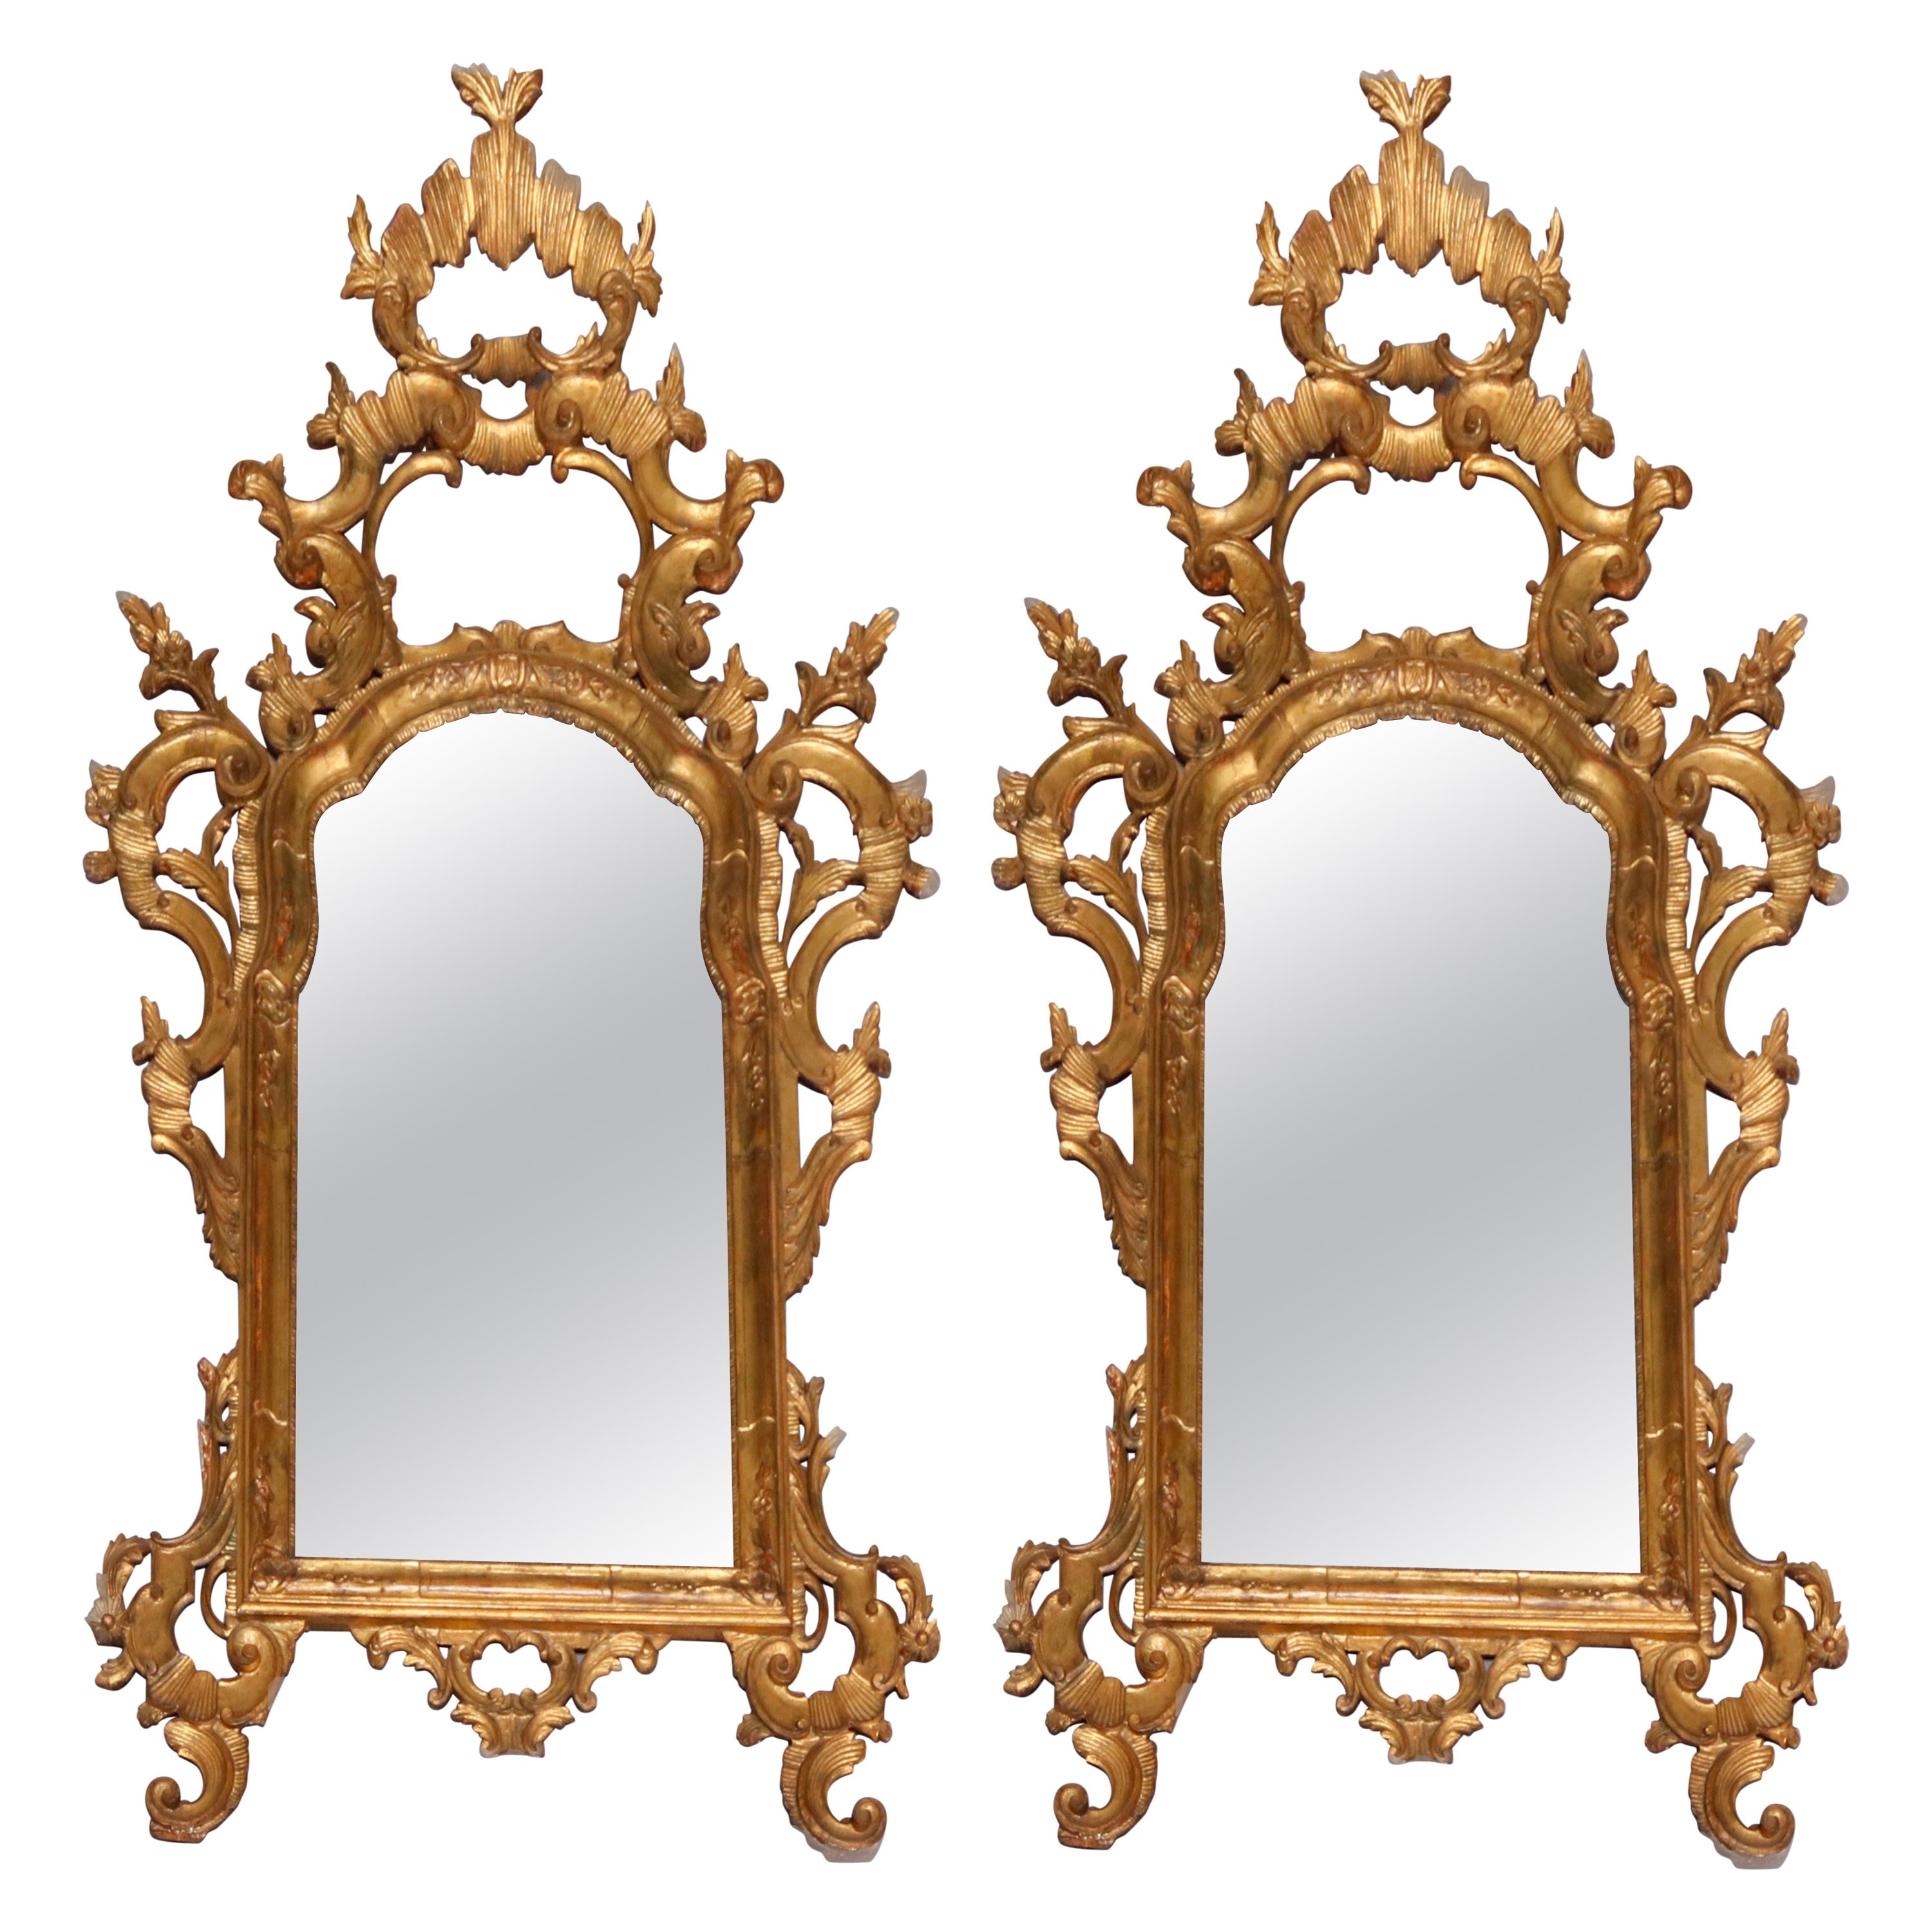 Monumental Antique Italian 18th Century Baroque Giltwood Over Mantel Mirrors